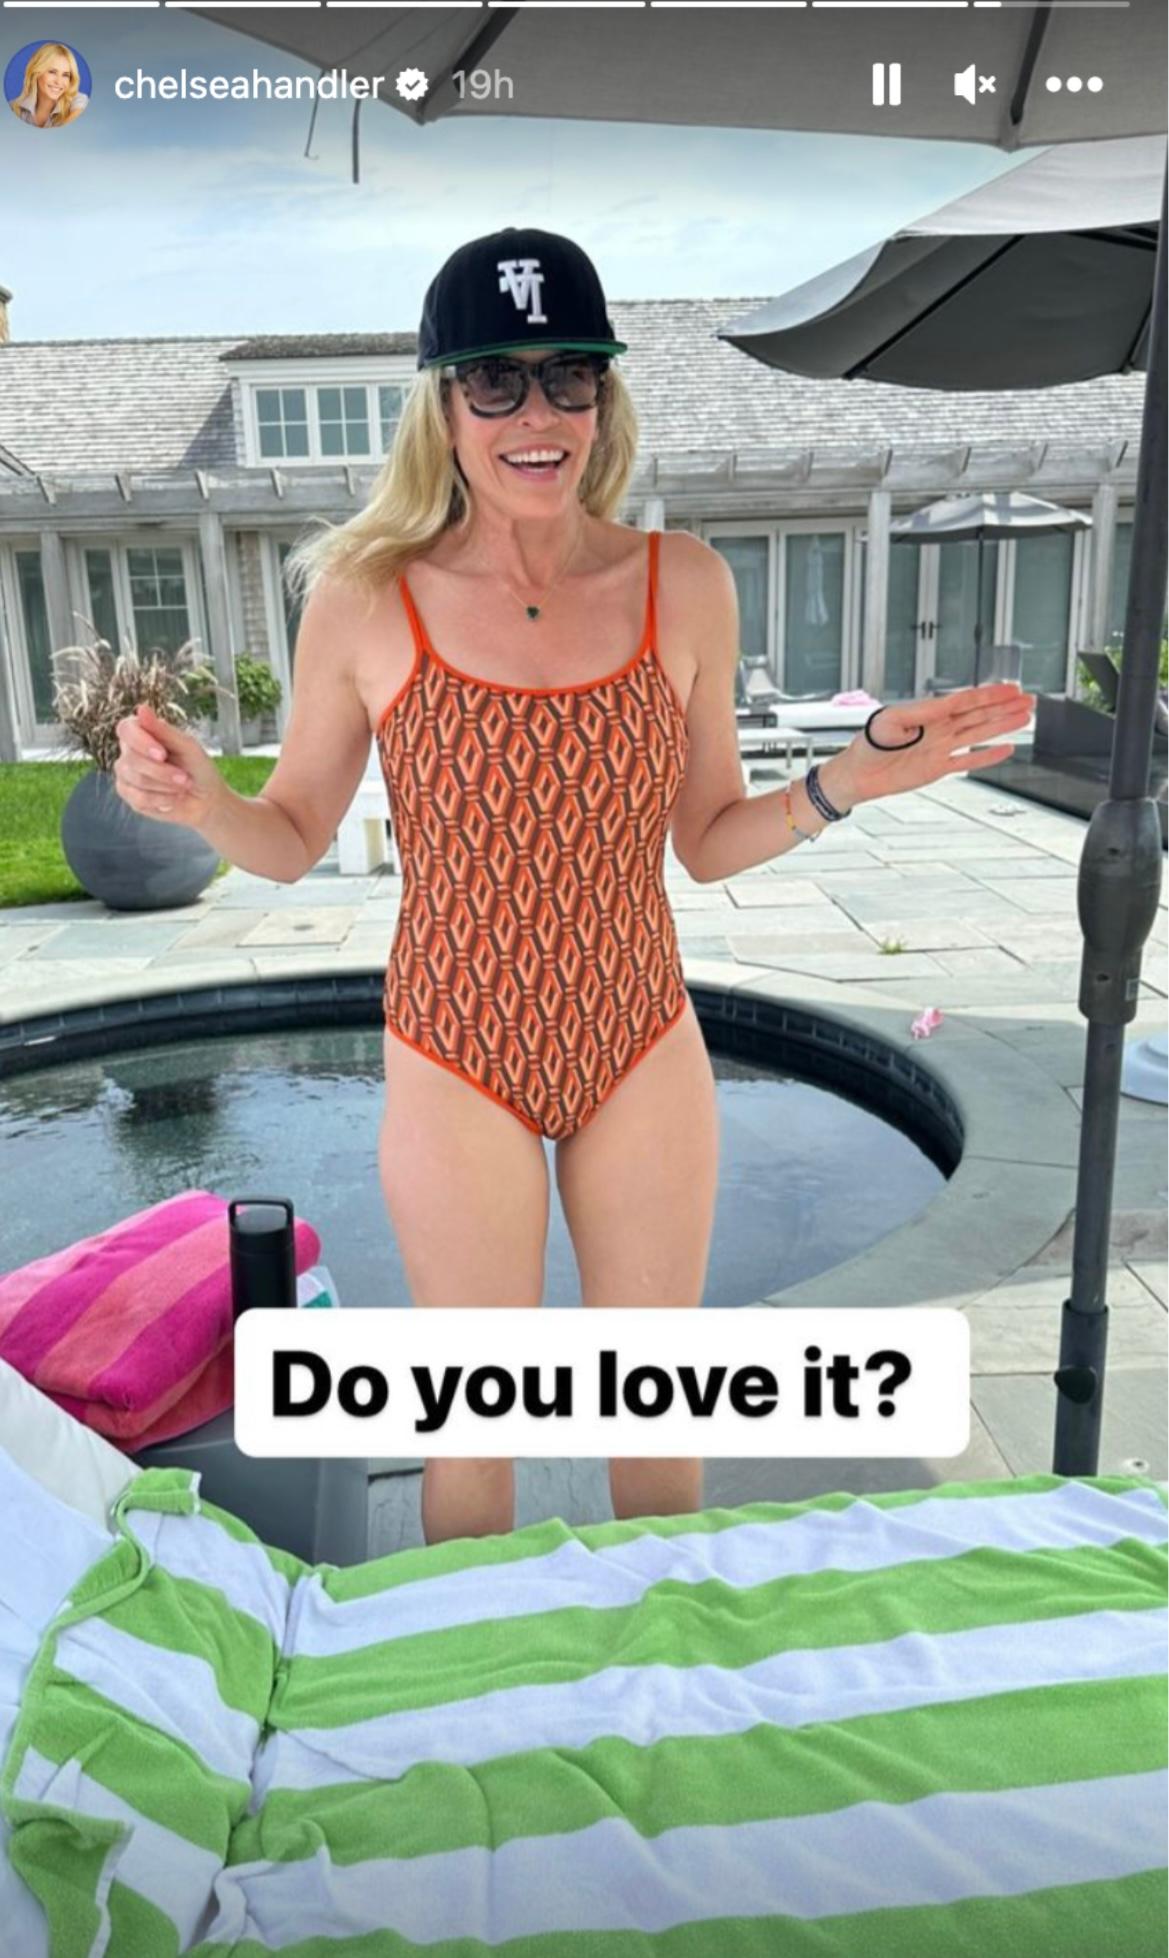 Chelsea Handler flaunts perky buns in bathing suit